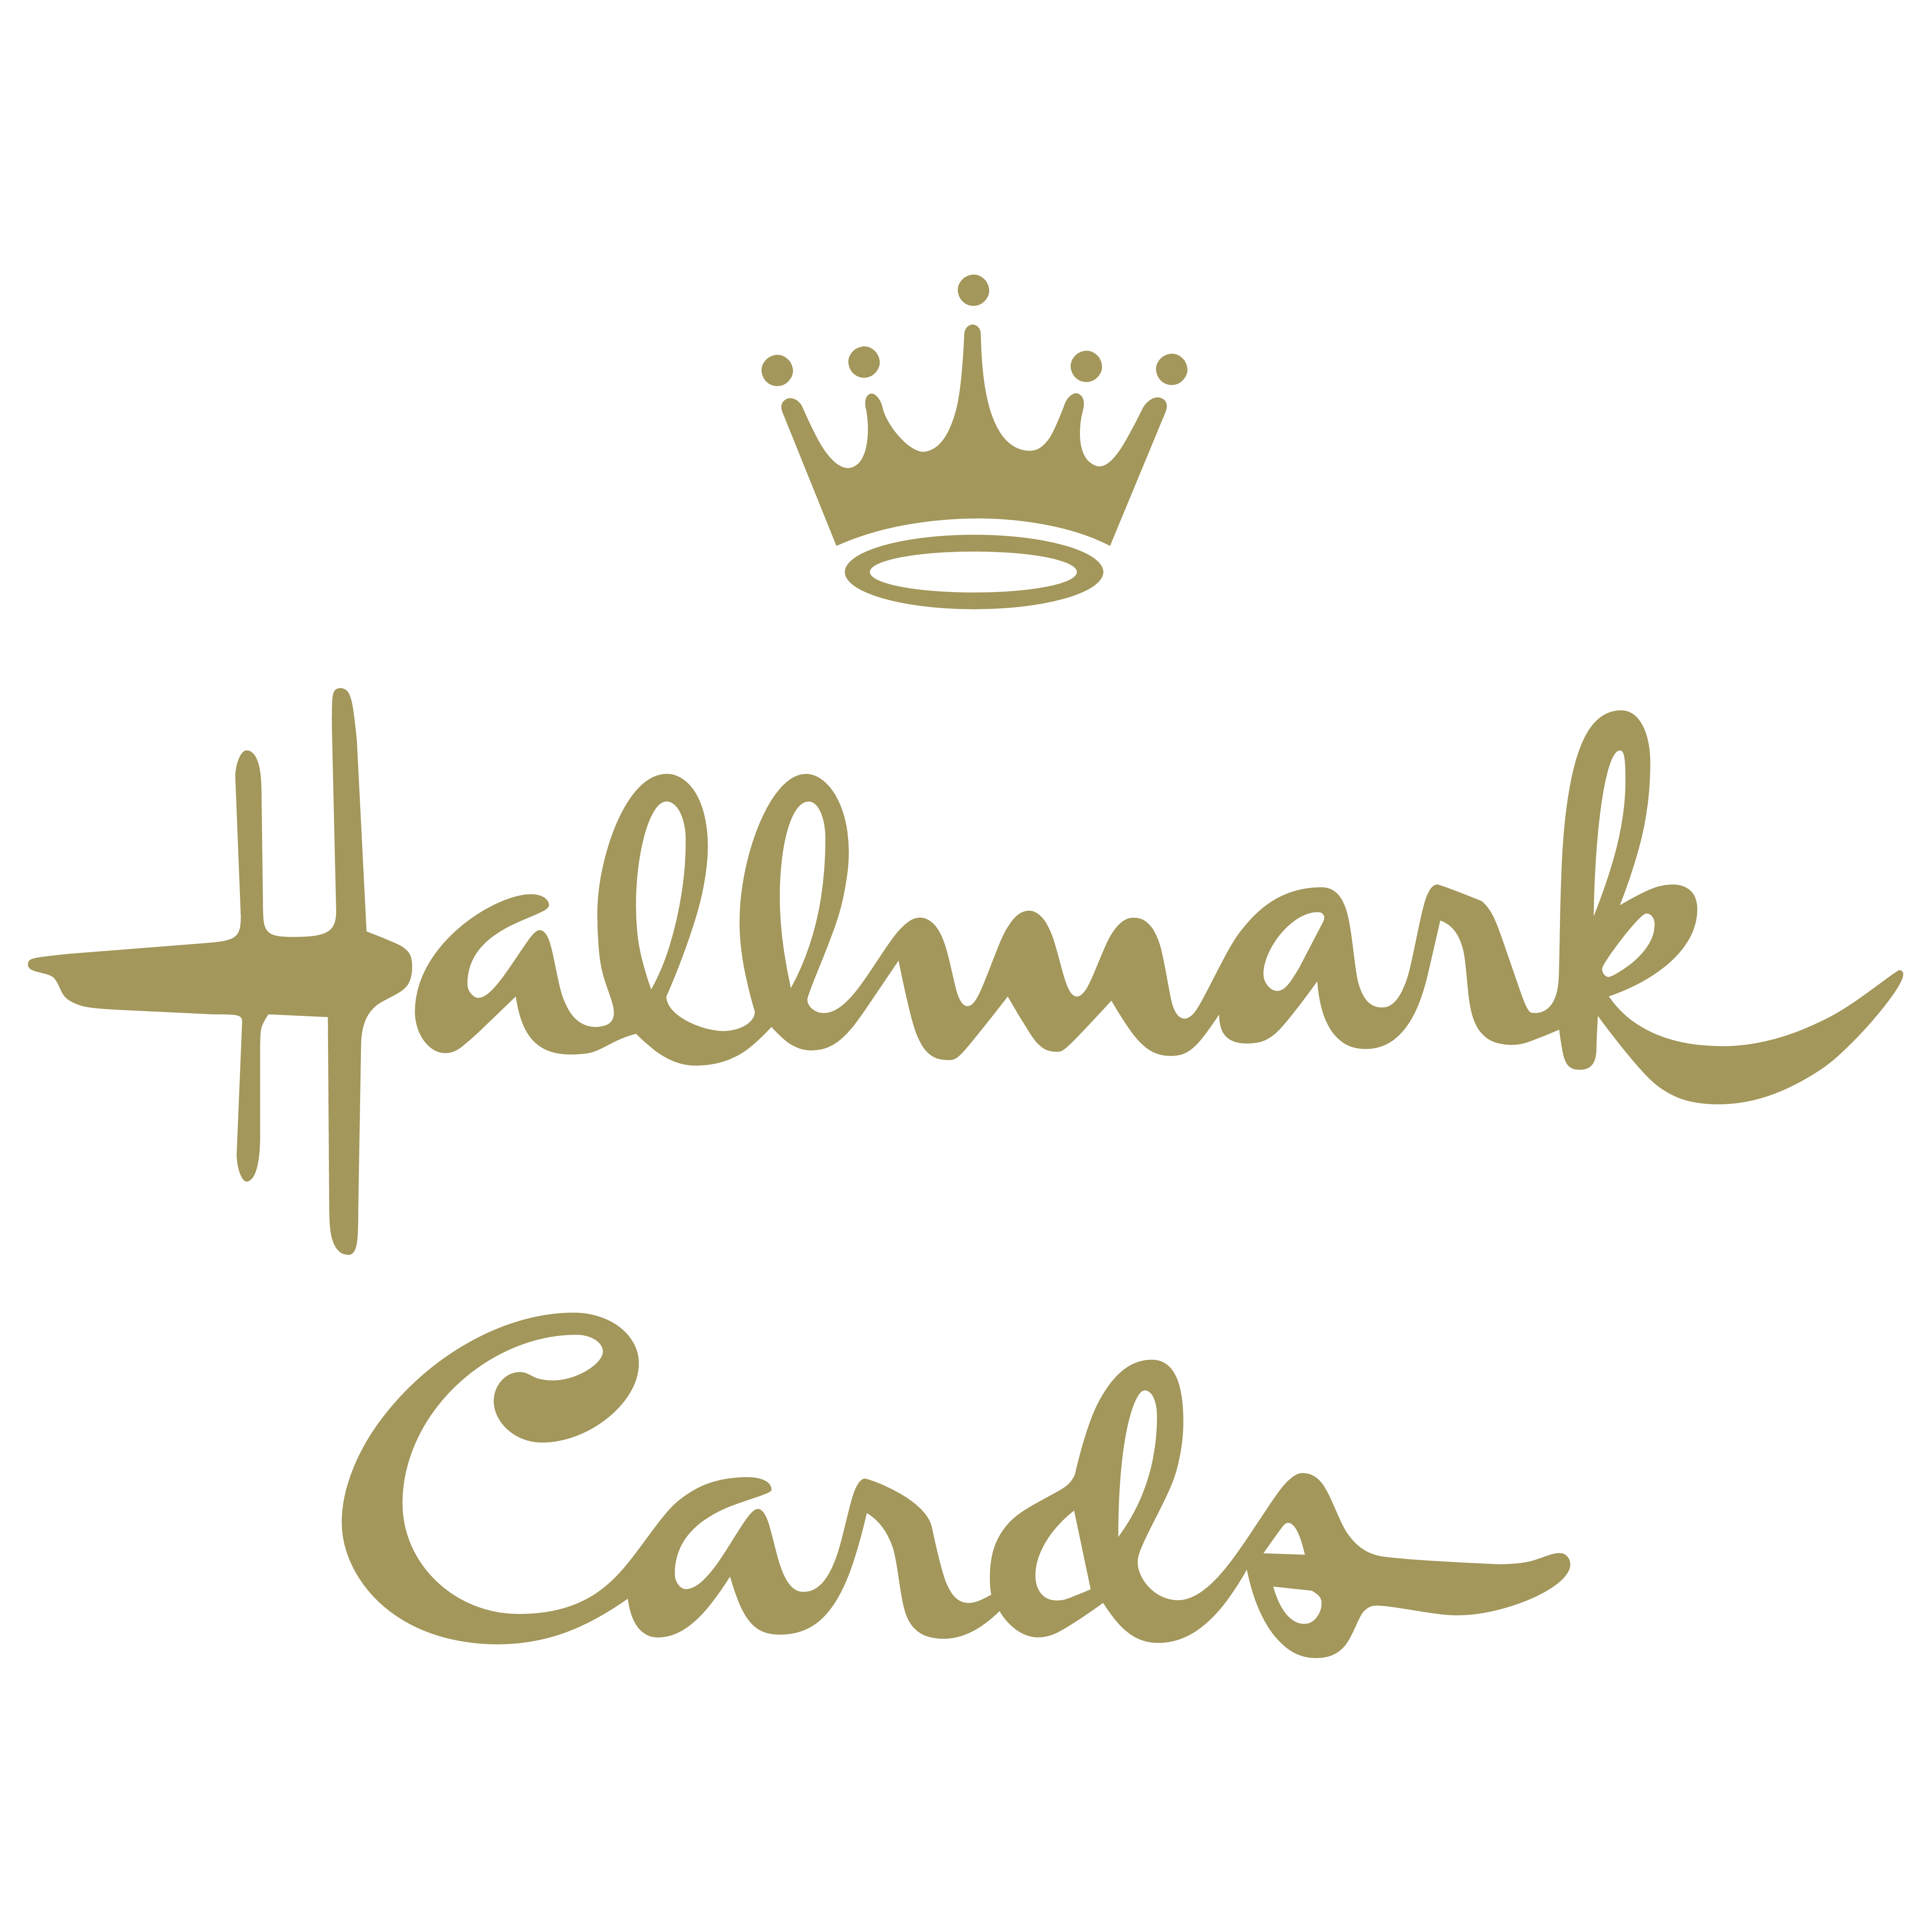 Hallmark Channel Svg Free Hallmark Channel Svg Etsy Seeklogo